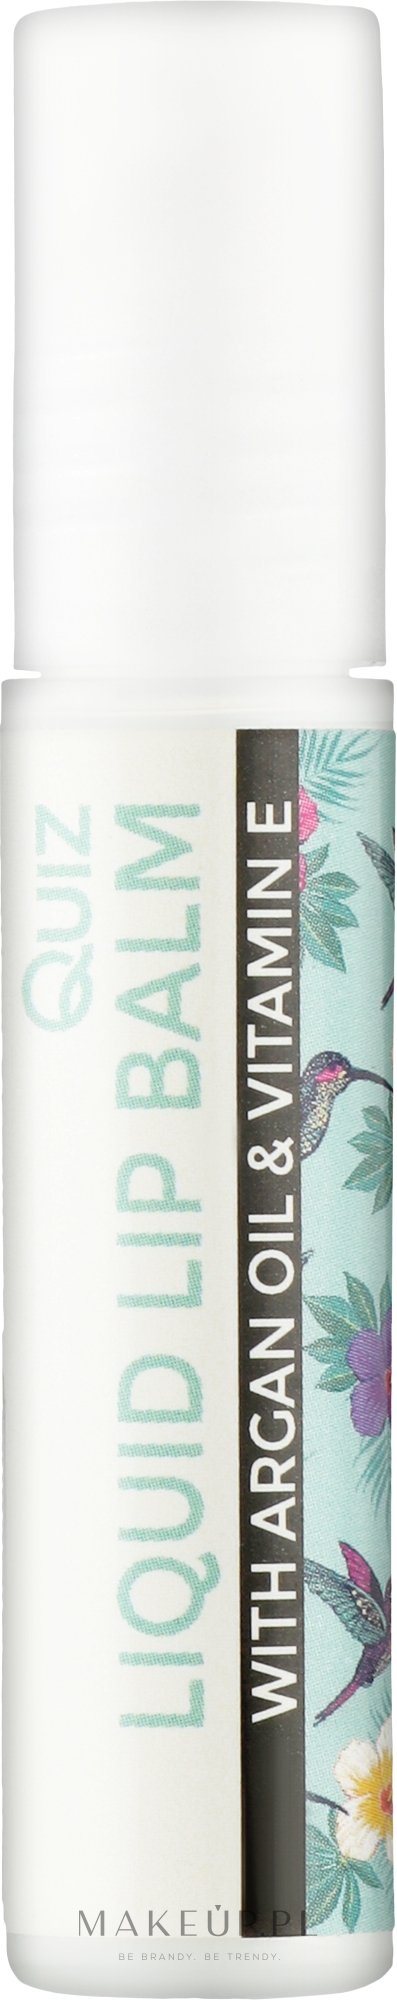 Balsam do ust - Quiz Cosmetics Liquid Lip Balm With Argan Oil & Vitamin E — Zdjęcie 10 ml